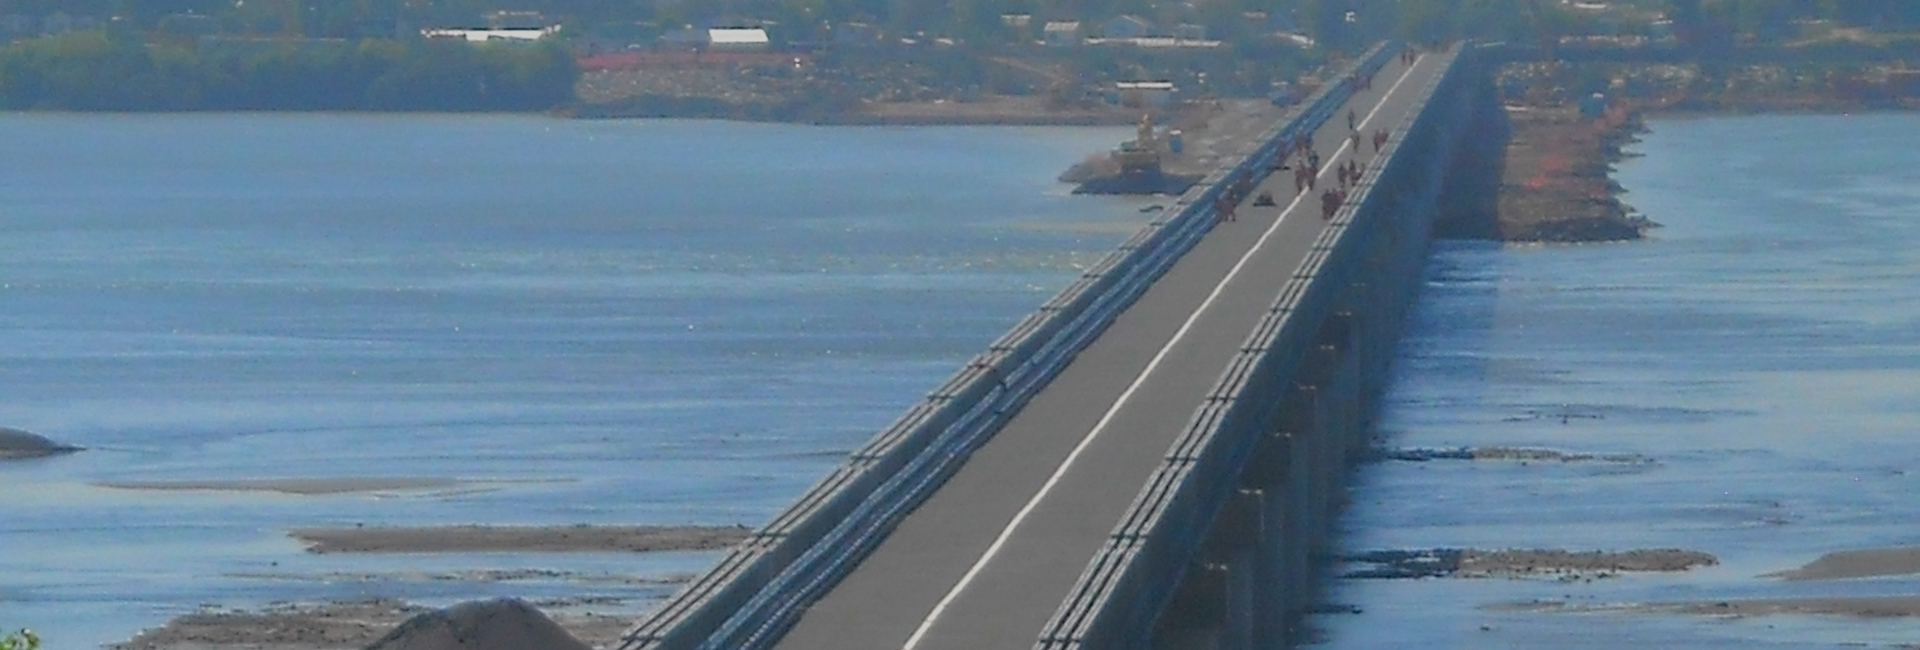 Vehicular Bridge